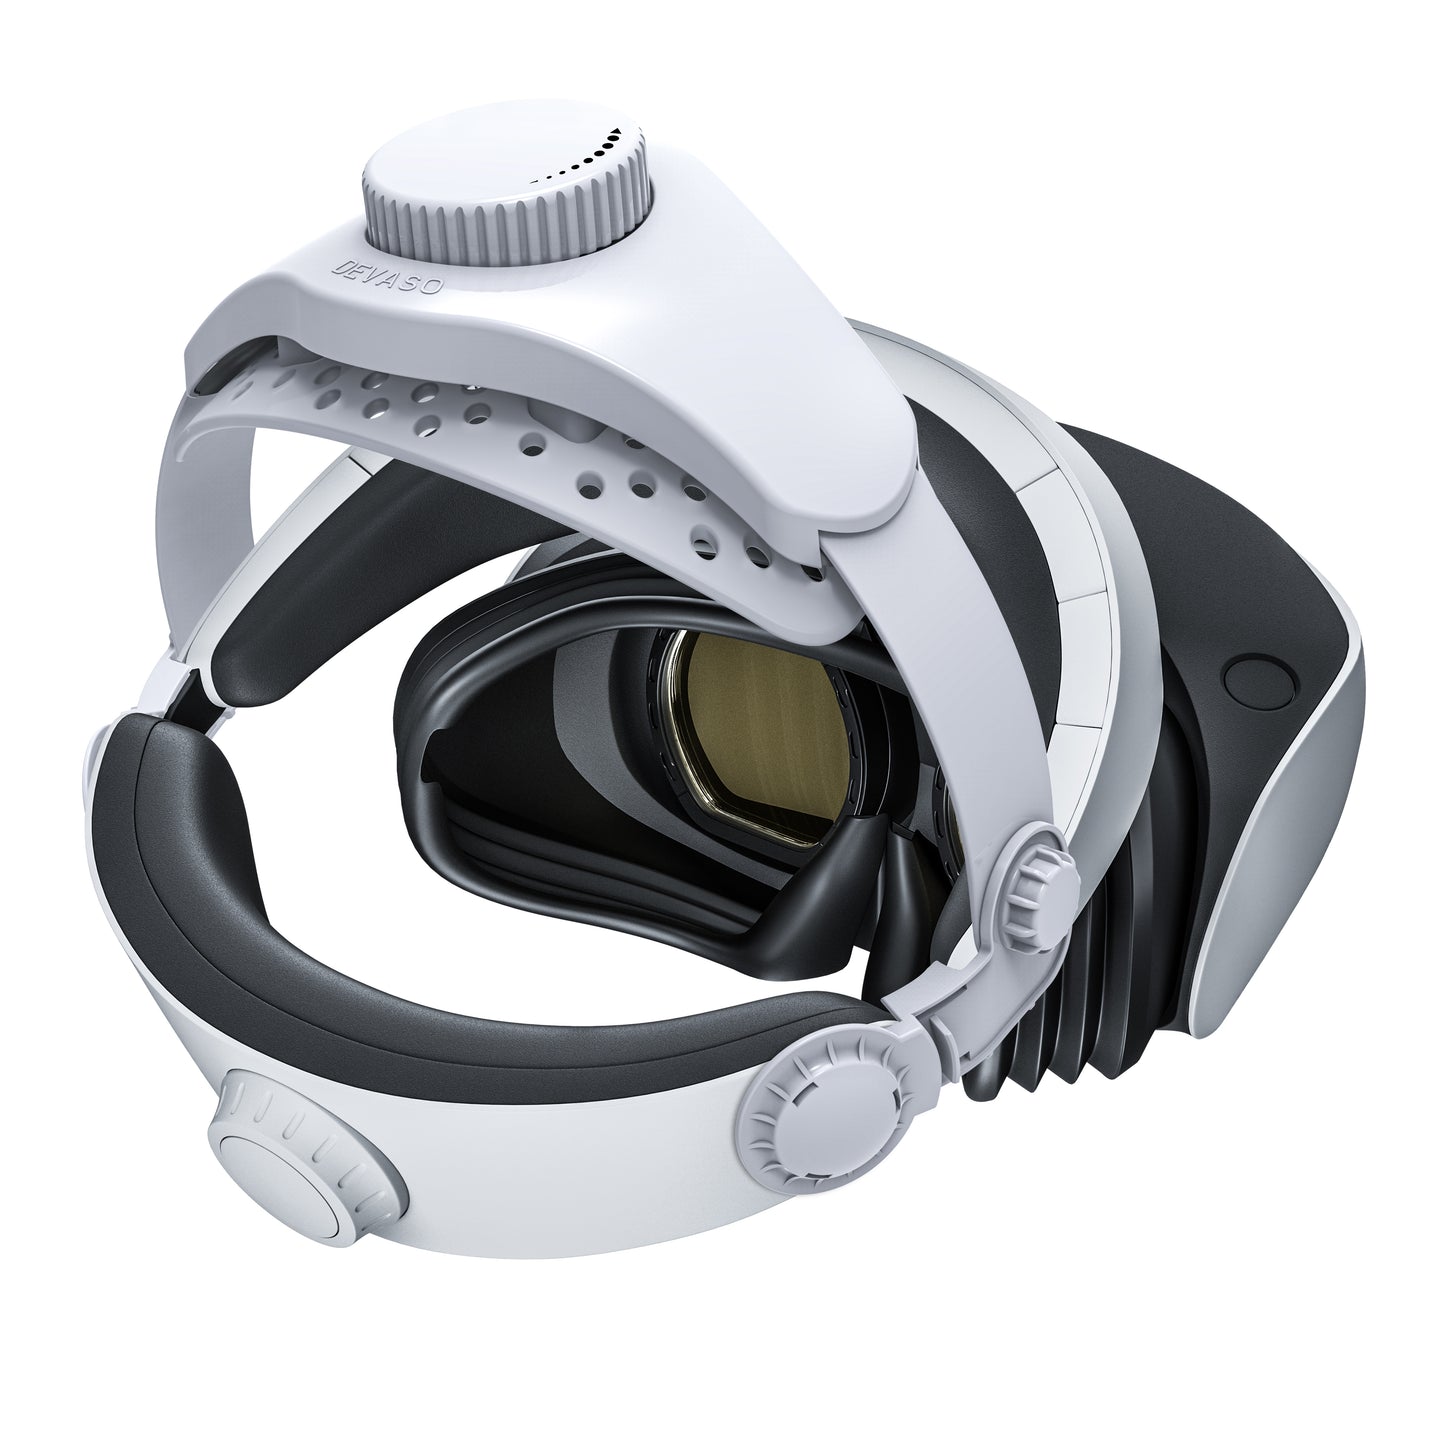 DEVASO Adjustable Head Strap for Playstation VR2, Reduced Pressure Lightweight